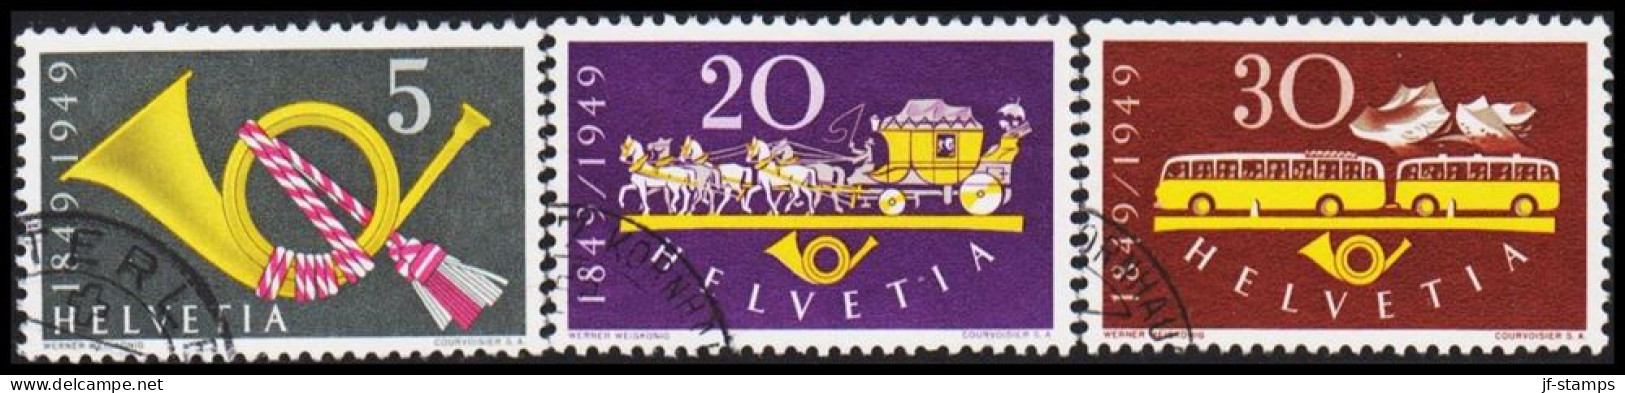 1949. HELVETIA - SCHWEIZ. 100 Years Post Complete Set.  - JF543970 - Oblitérés